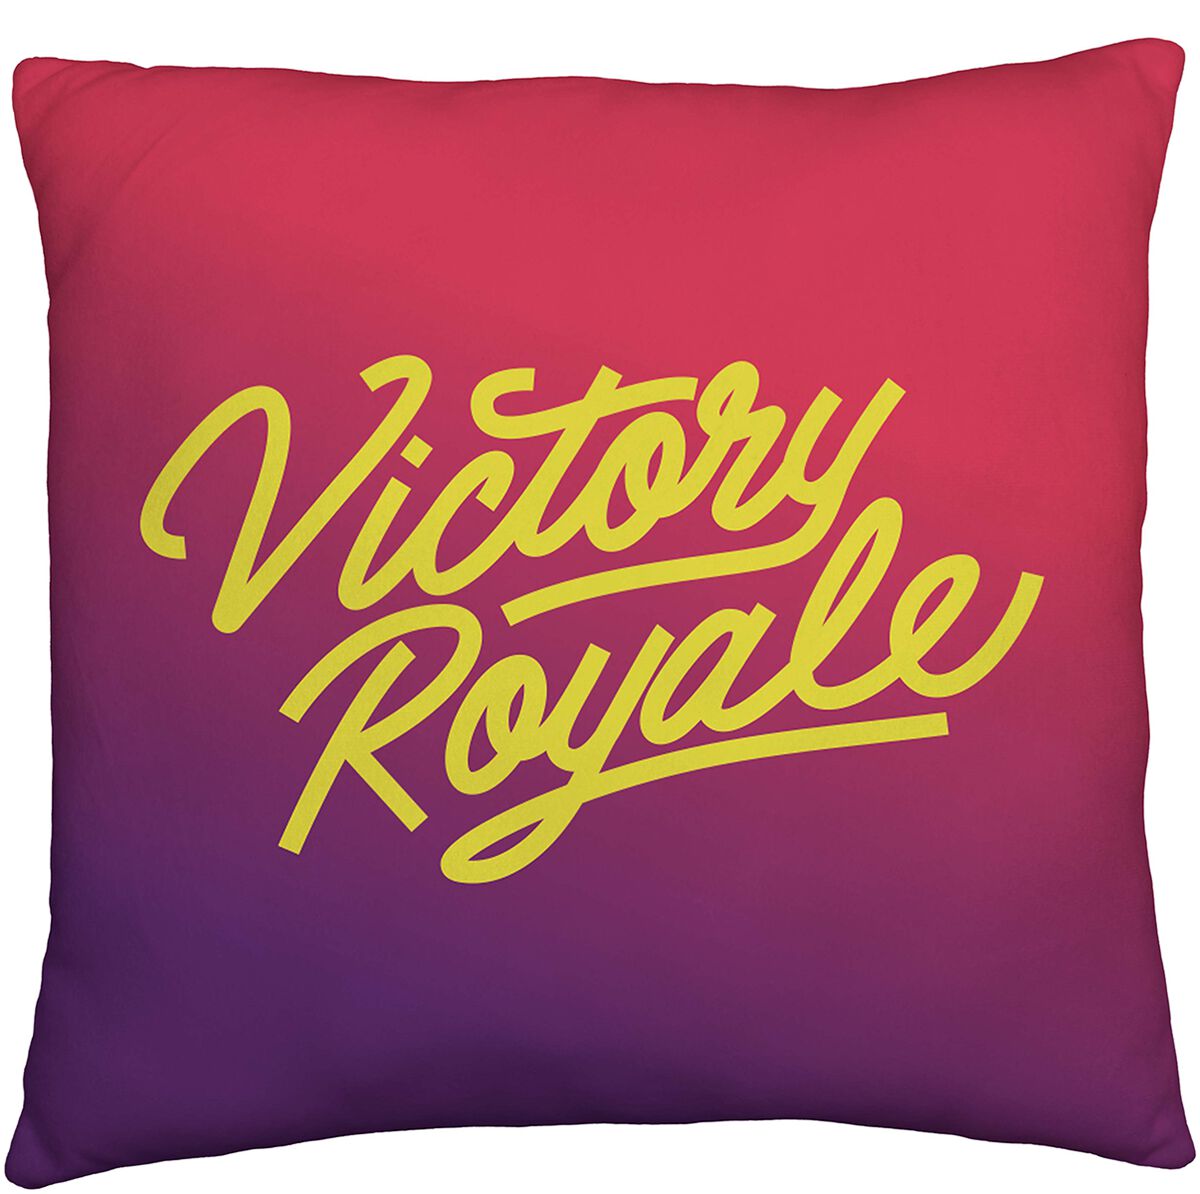 Fortnite Victory Royale Pillows multicolour